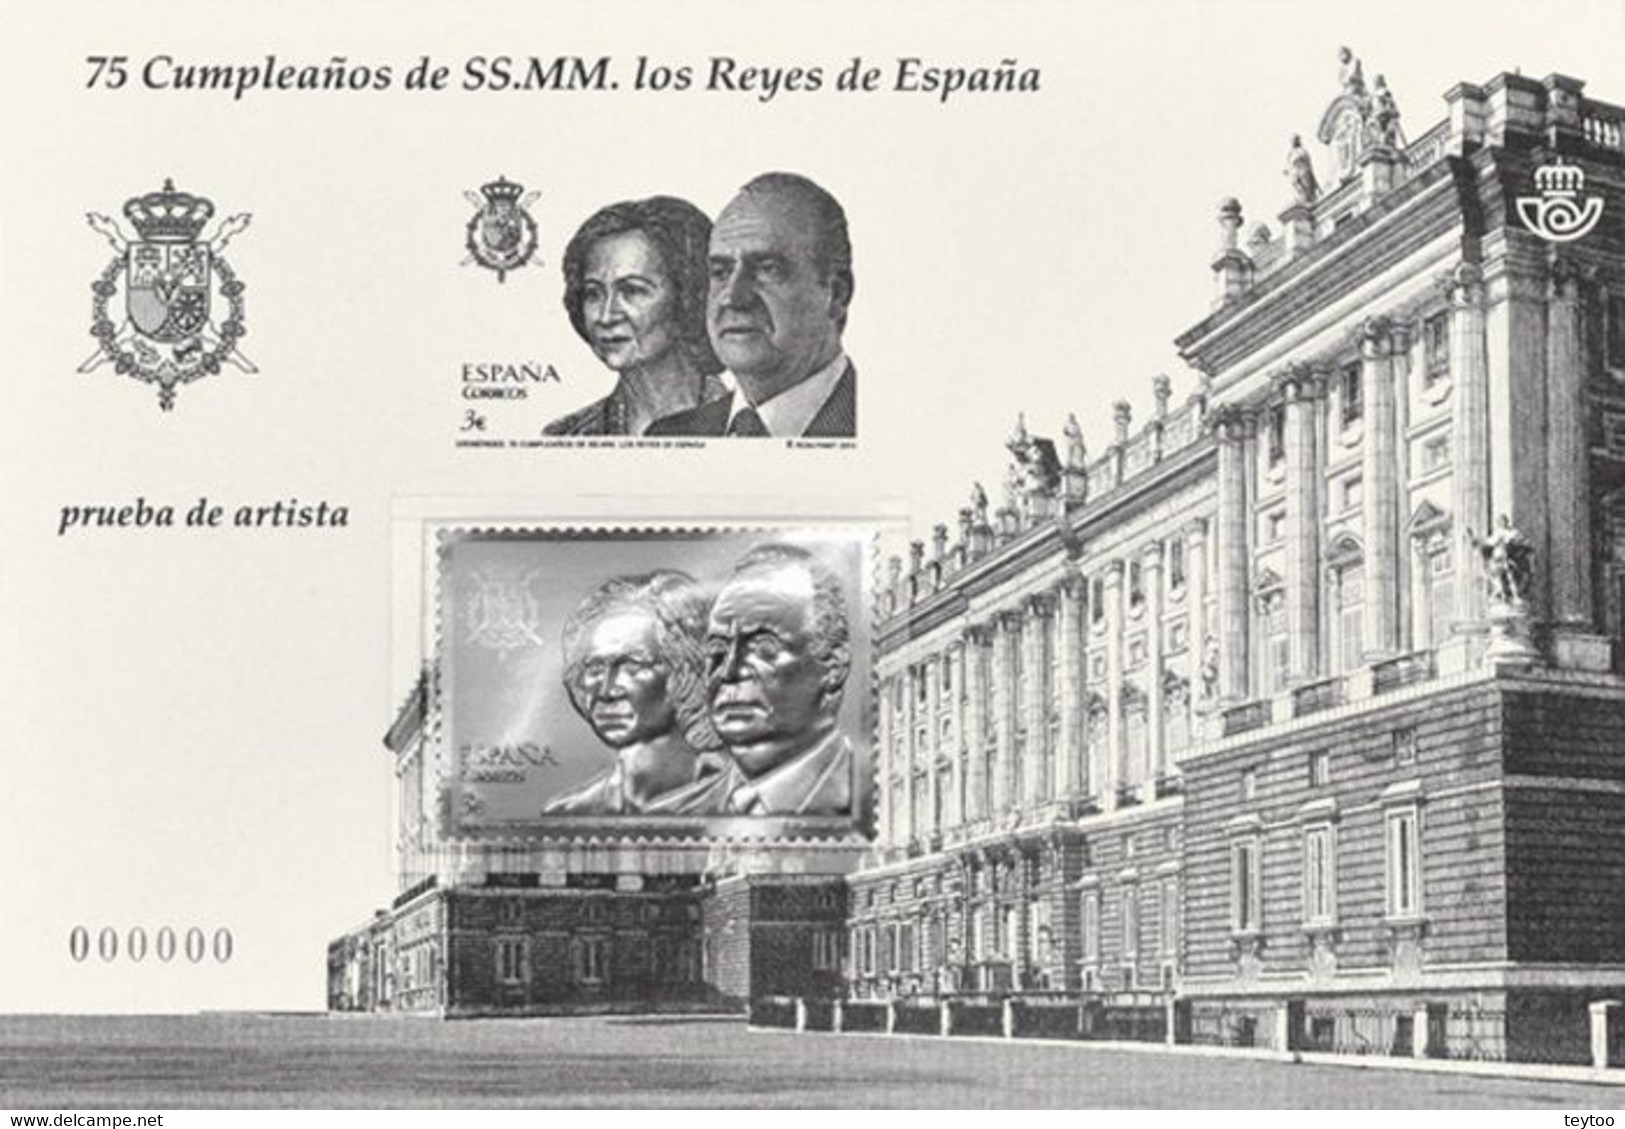 P0114# España 2013. [PA] Prueba 75 Aniv. De SS. MM. Los Reyes (N) - Proeven & Herdrukken